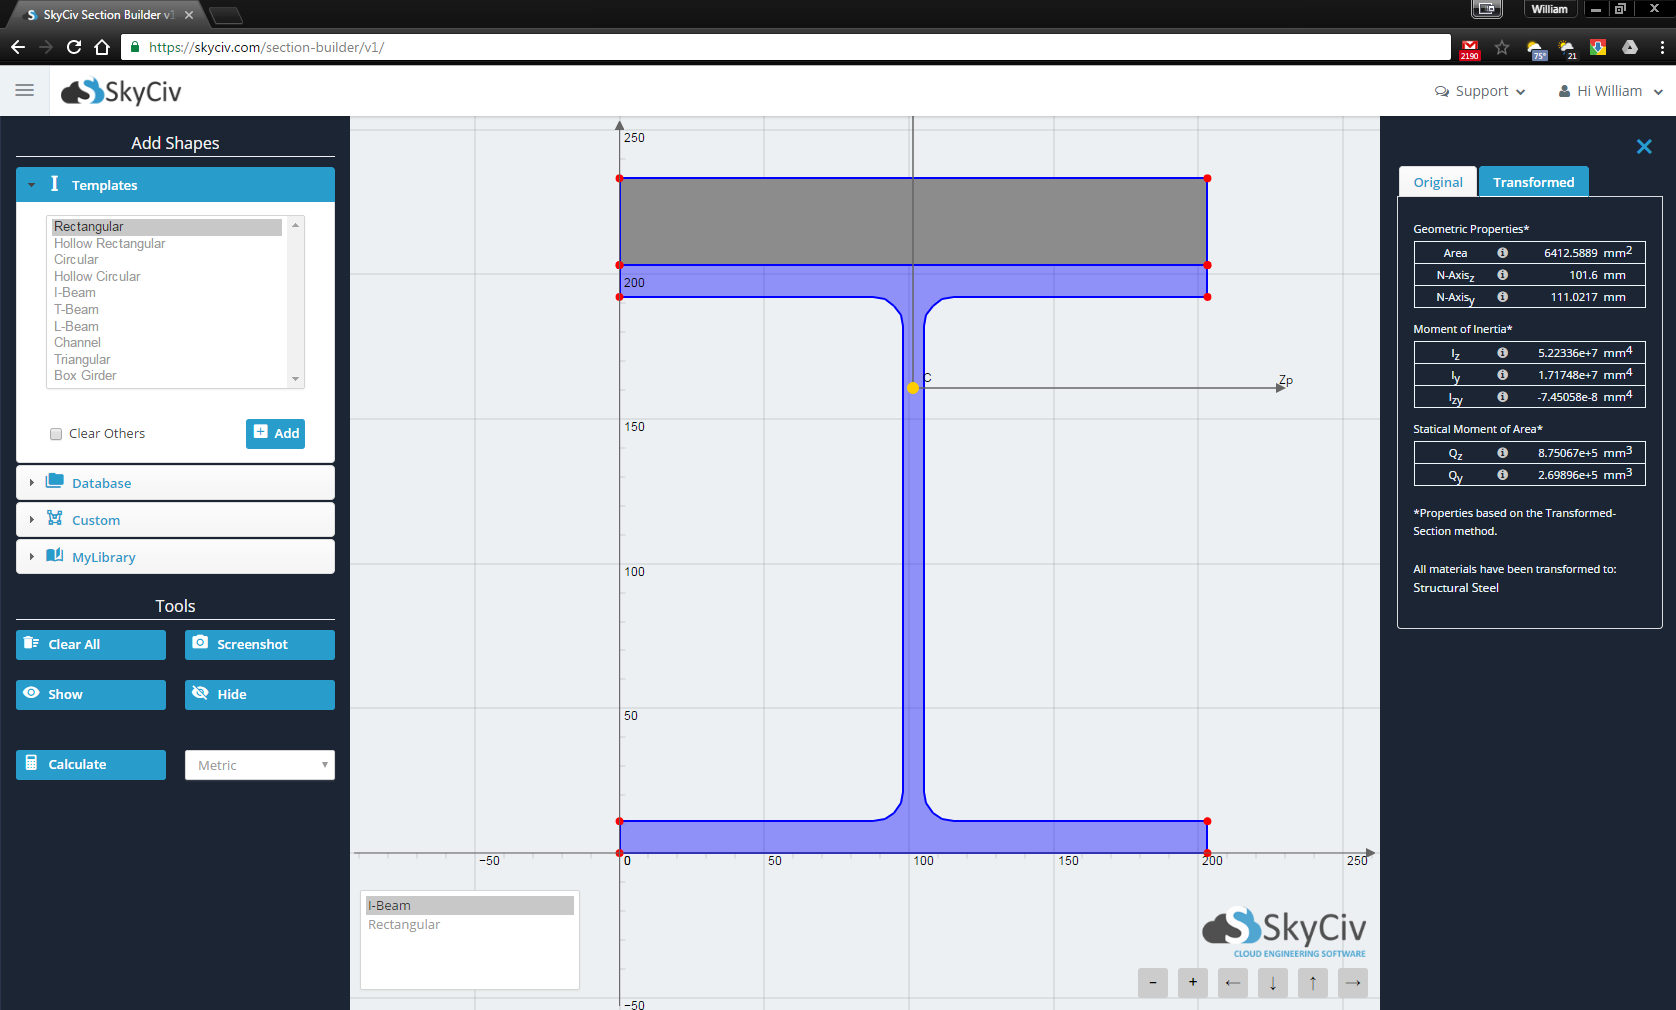 SkyCiv Composite Beam Software Section Builder Analysis